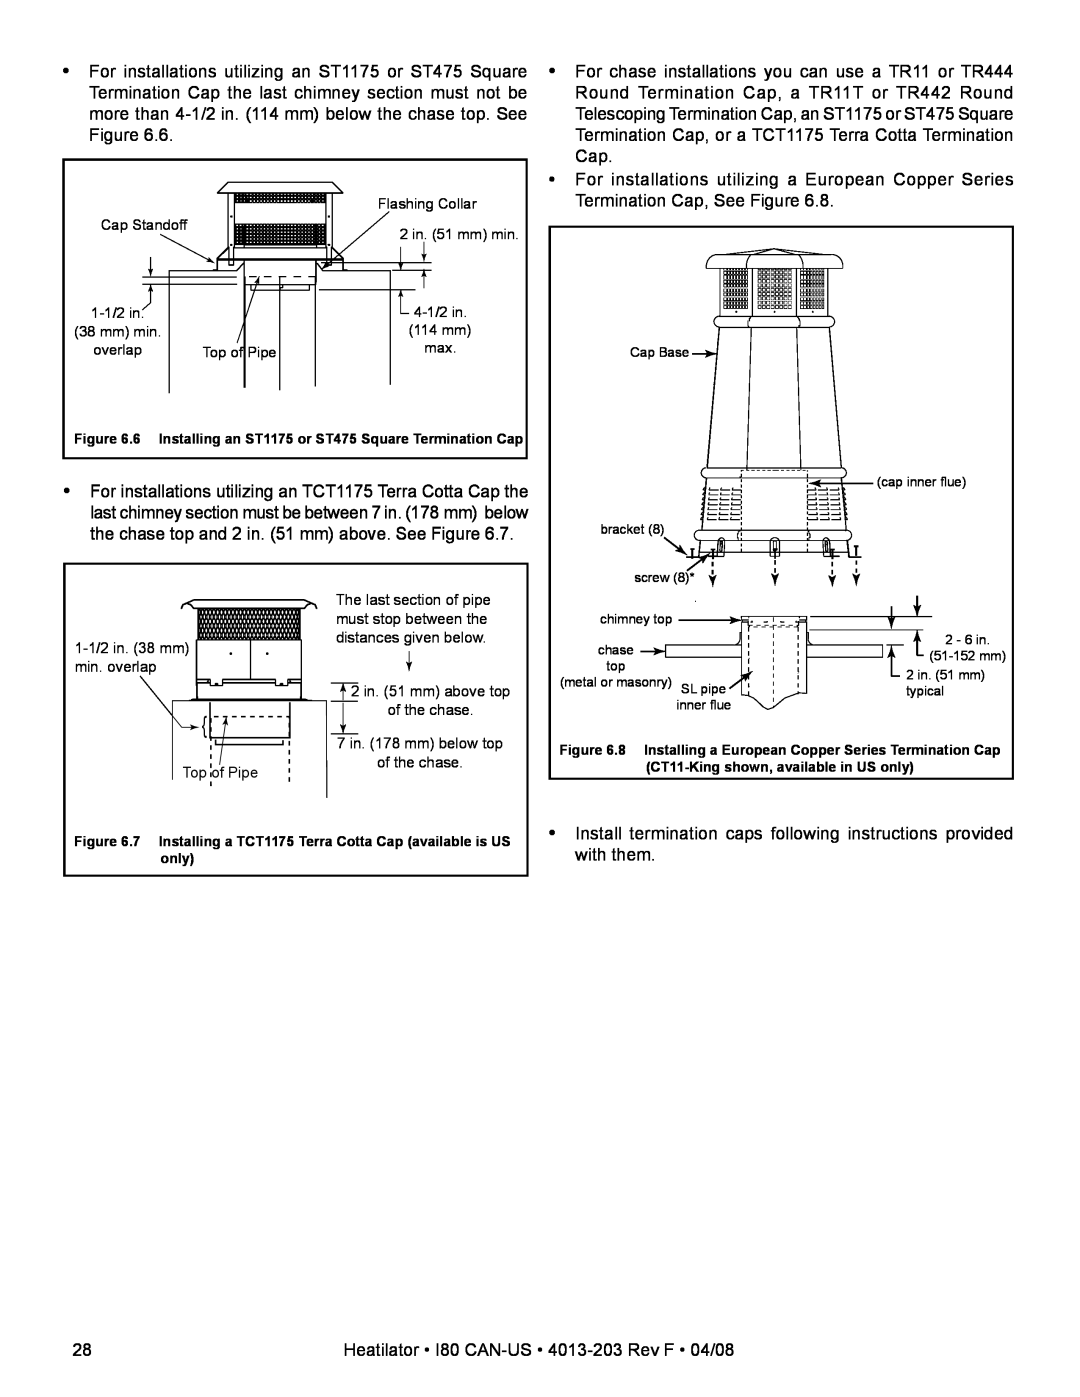 Heatiator owner manual Heatilator I80 CAN-US 4013-203Rev F 04/08 